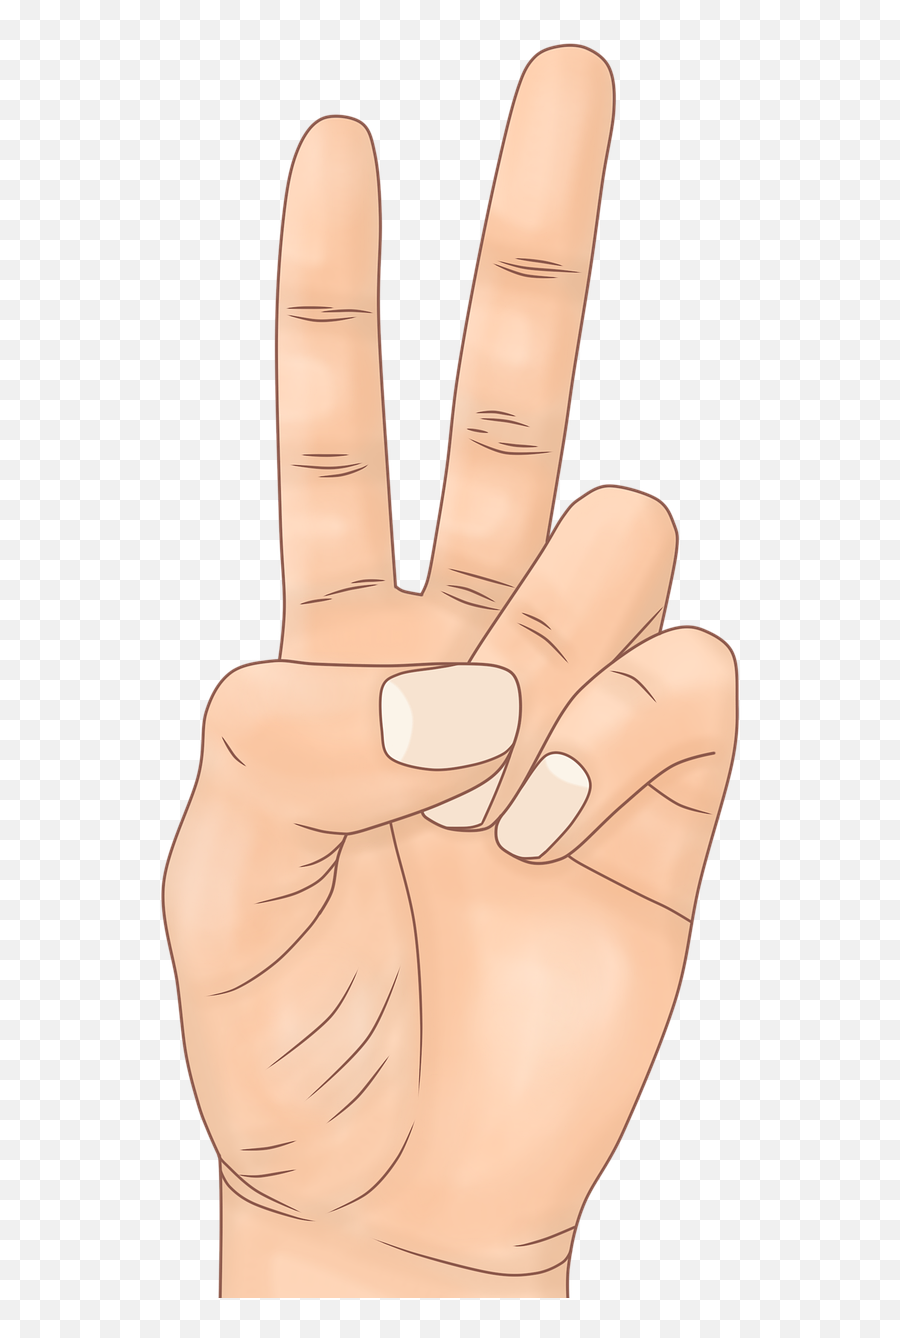 Hand Drawn Drawing Of - Free Image On Pixabay Emoji,Hand Sy Mbols Emoticons